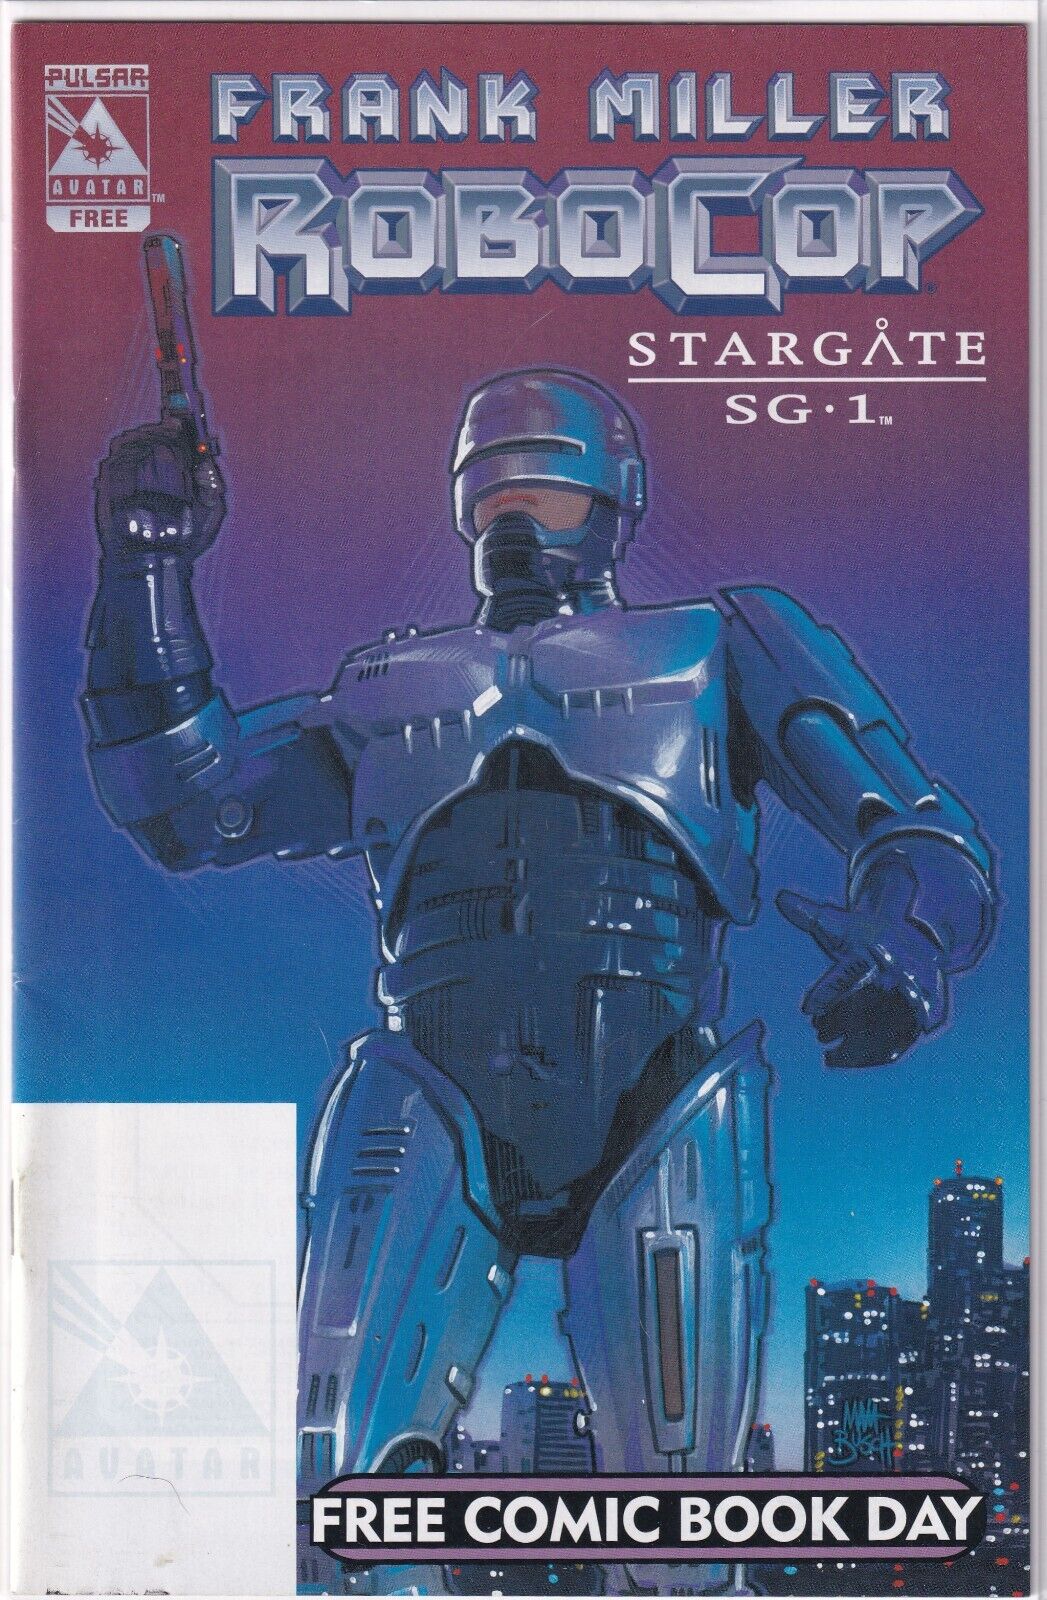 Frank Miller RoboCop Stargate SG-1 #0 Pulsar Avatar (2003) Free Comic Book Day